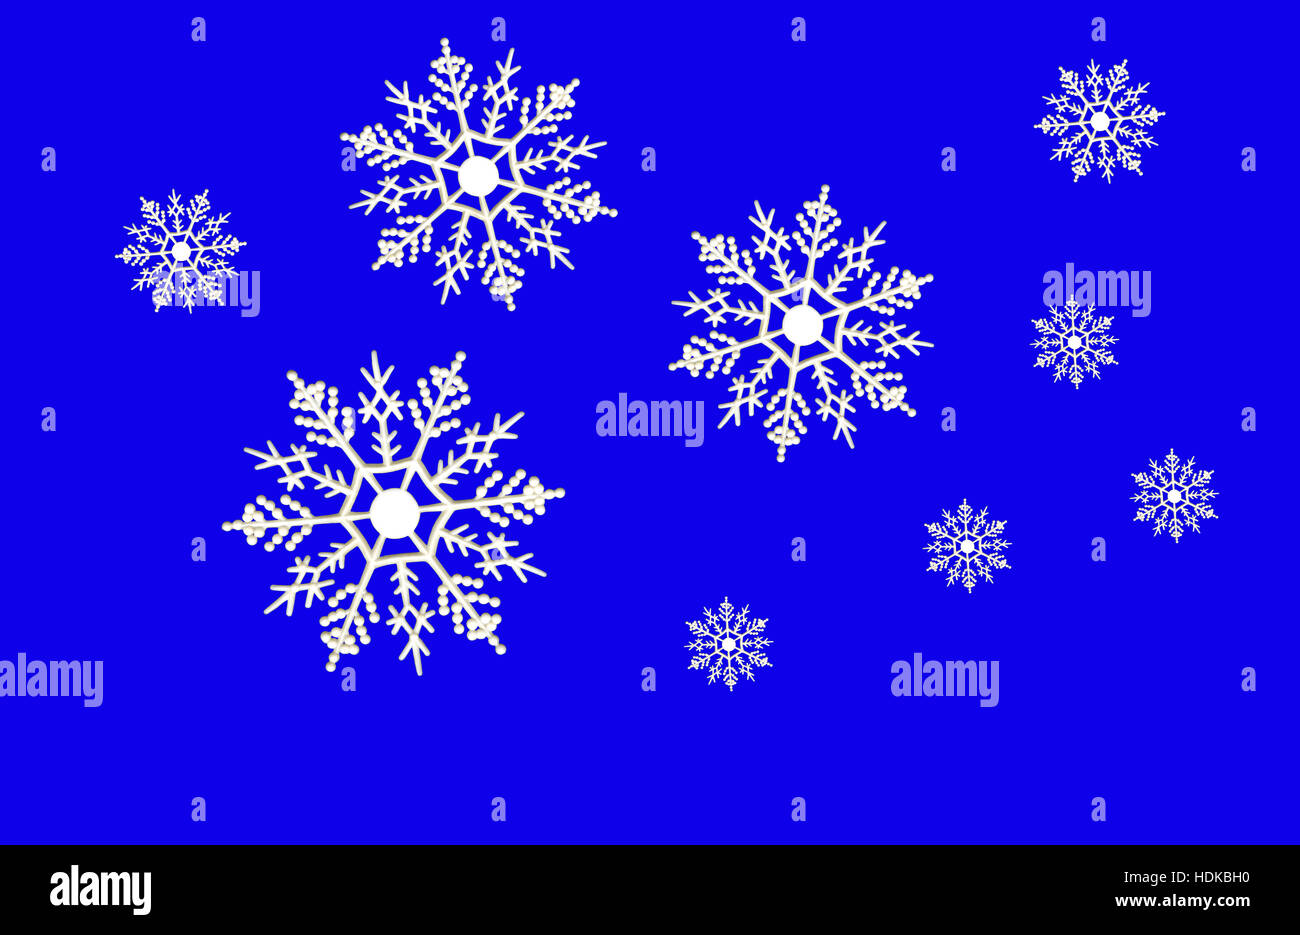 White snowflake ornaments on blue background Stock Photo